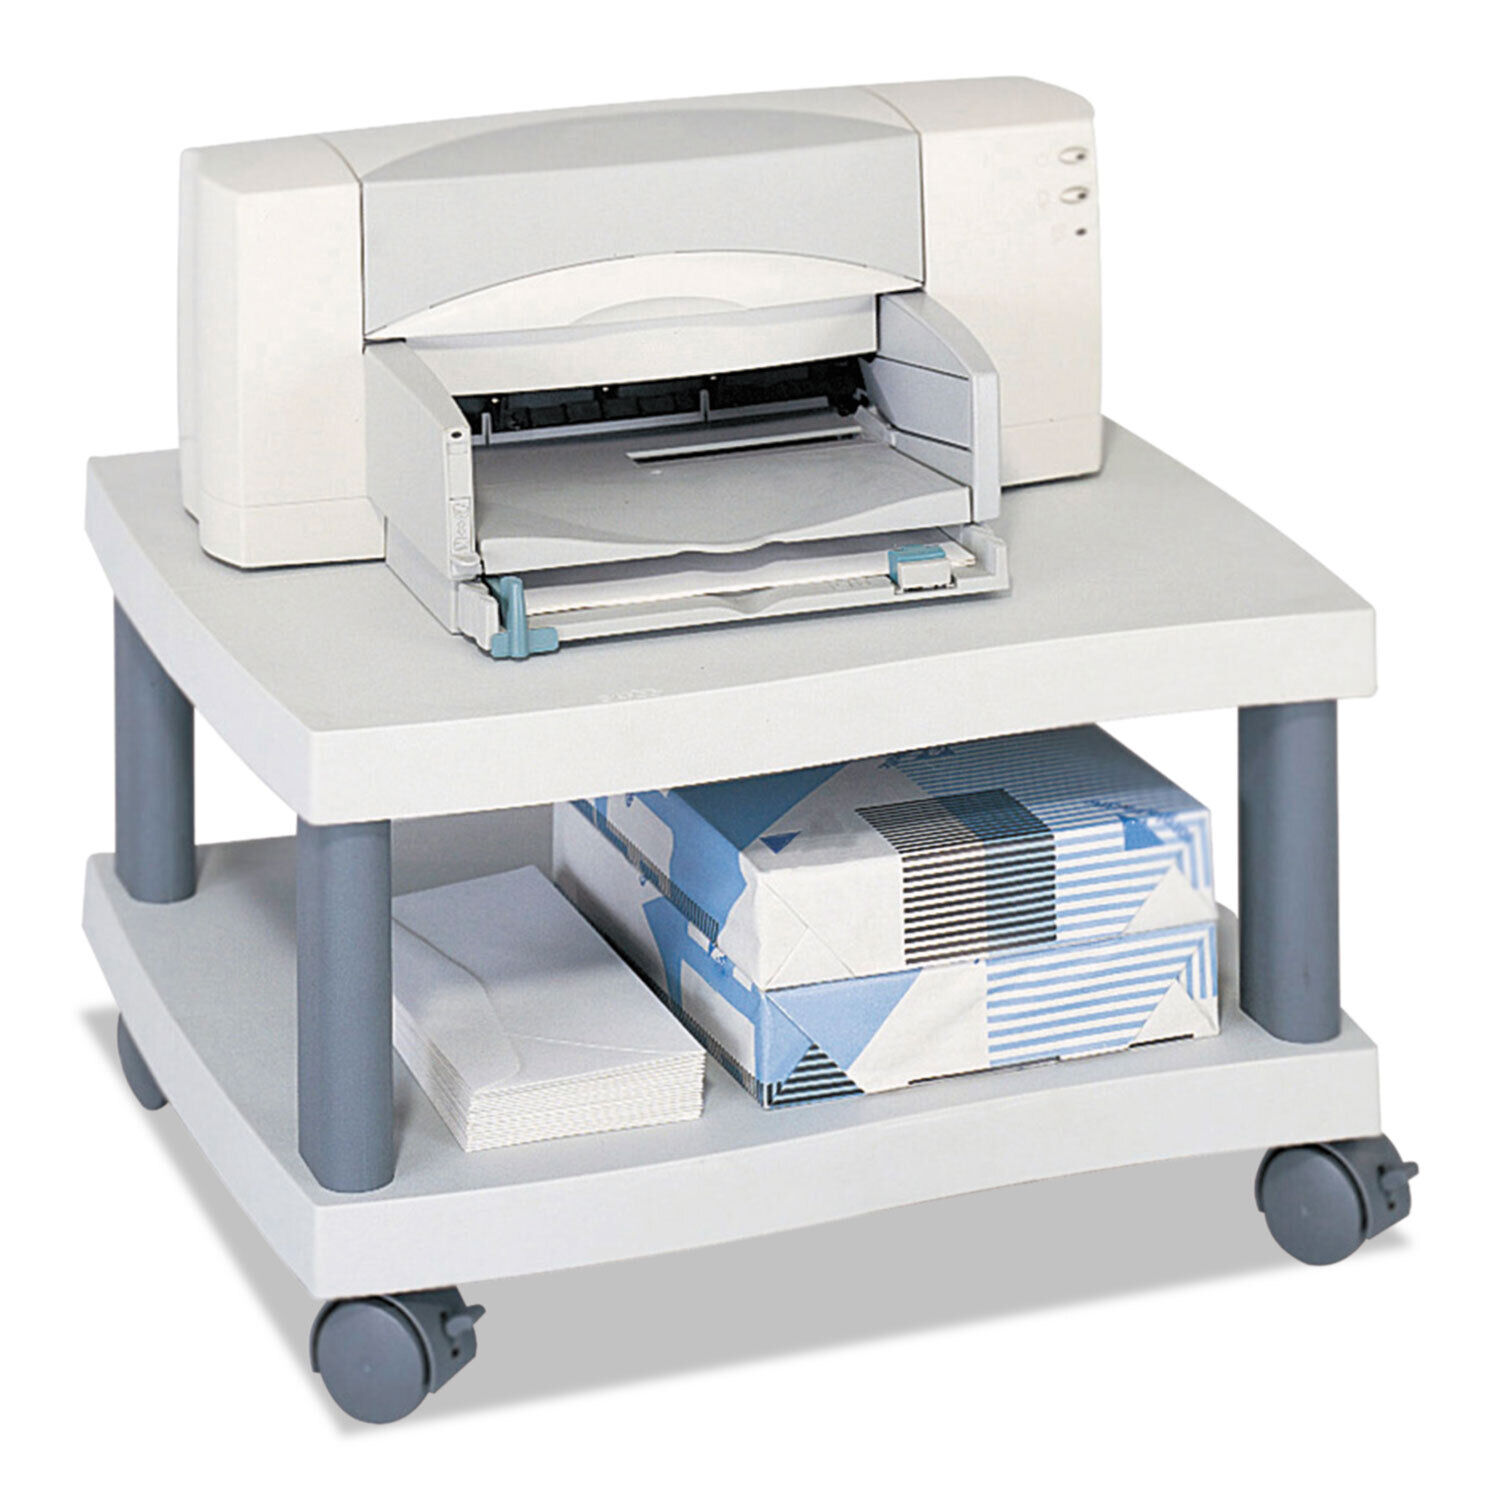 Safco Wave Design Printer Stand Two-Shelf Charcoal Gray 1861GR